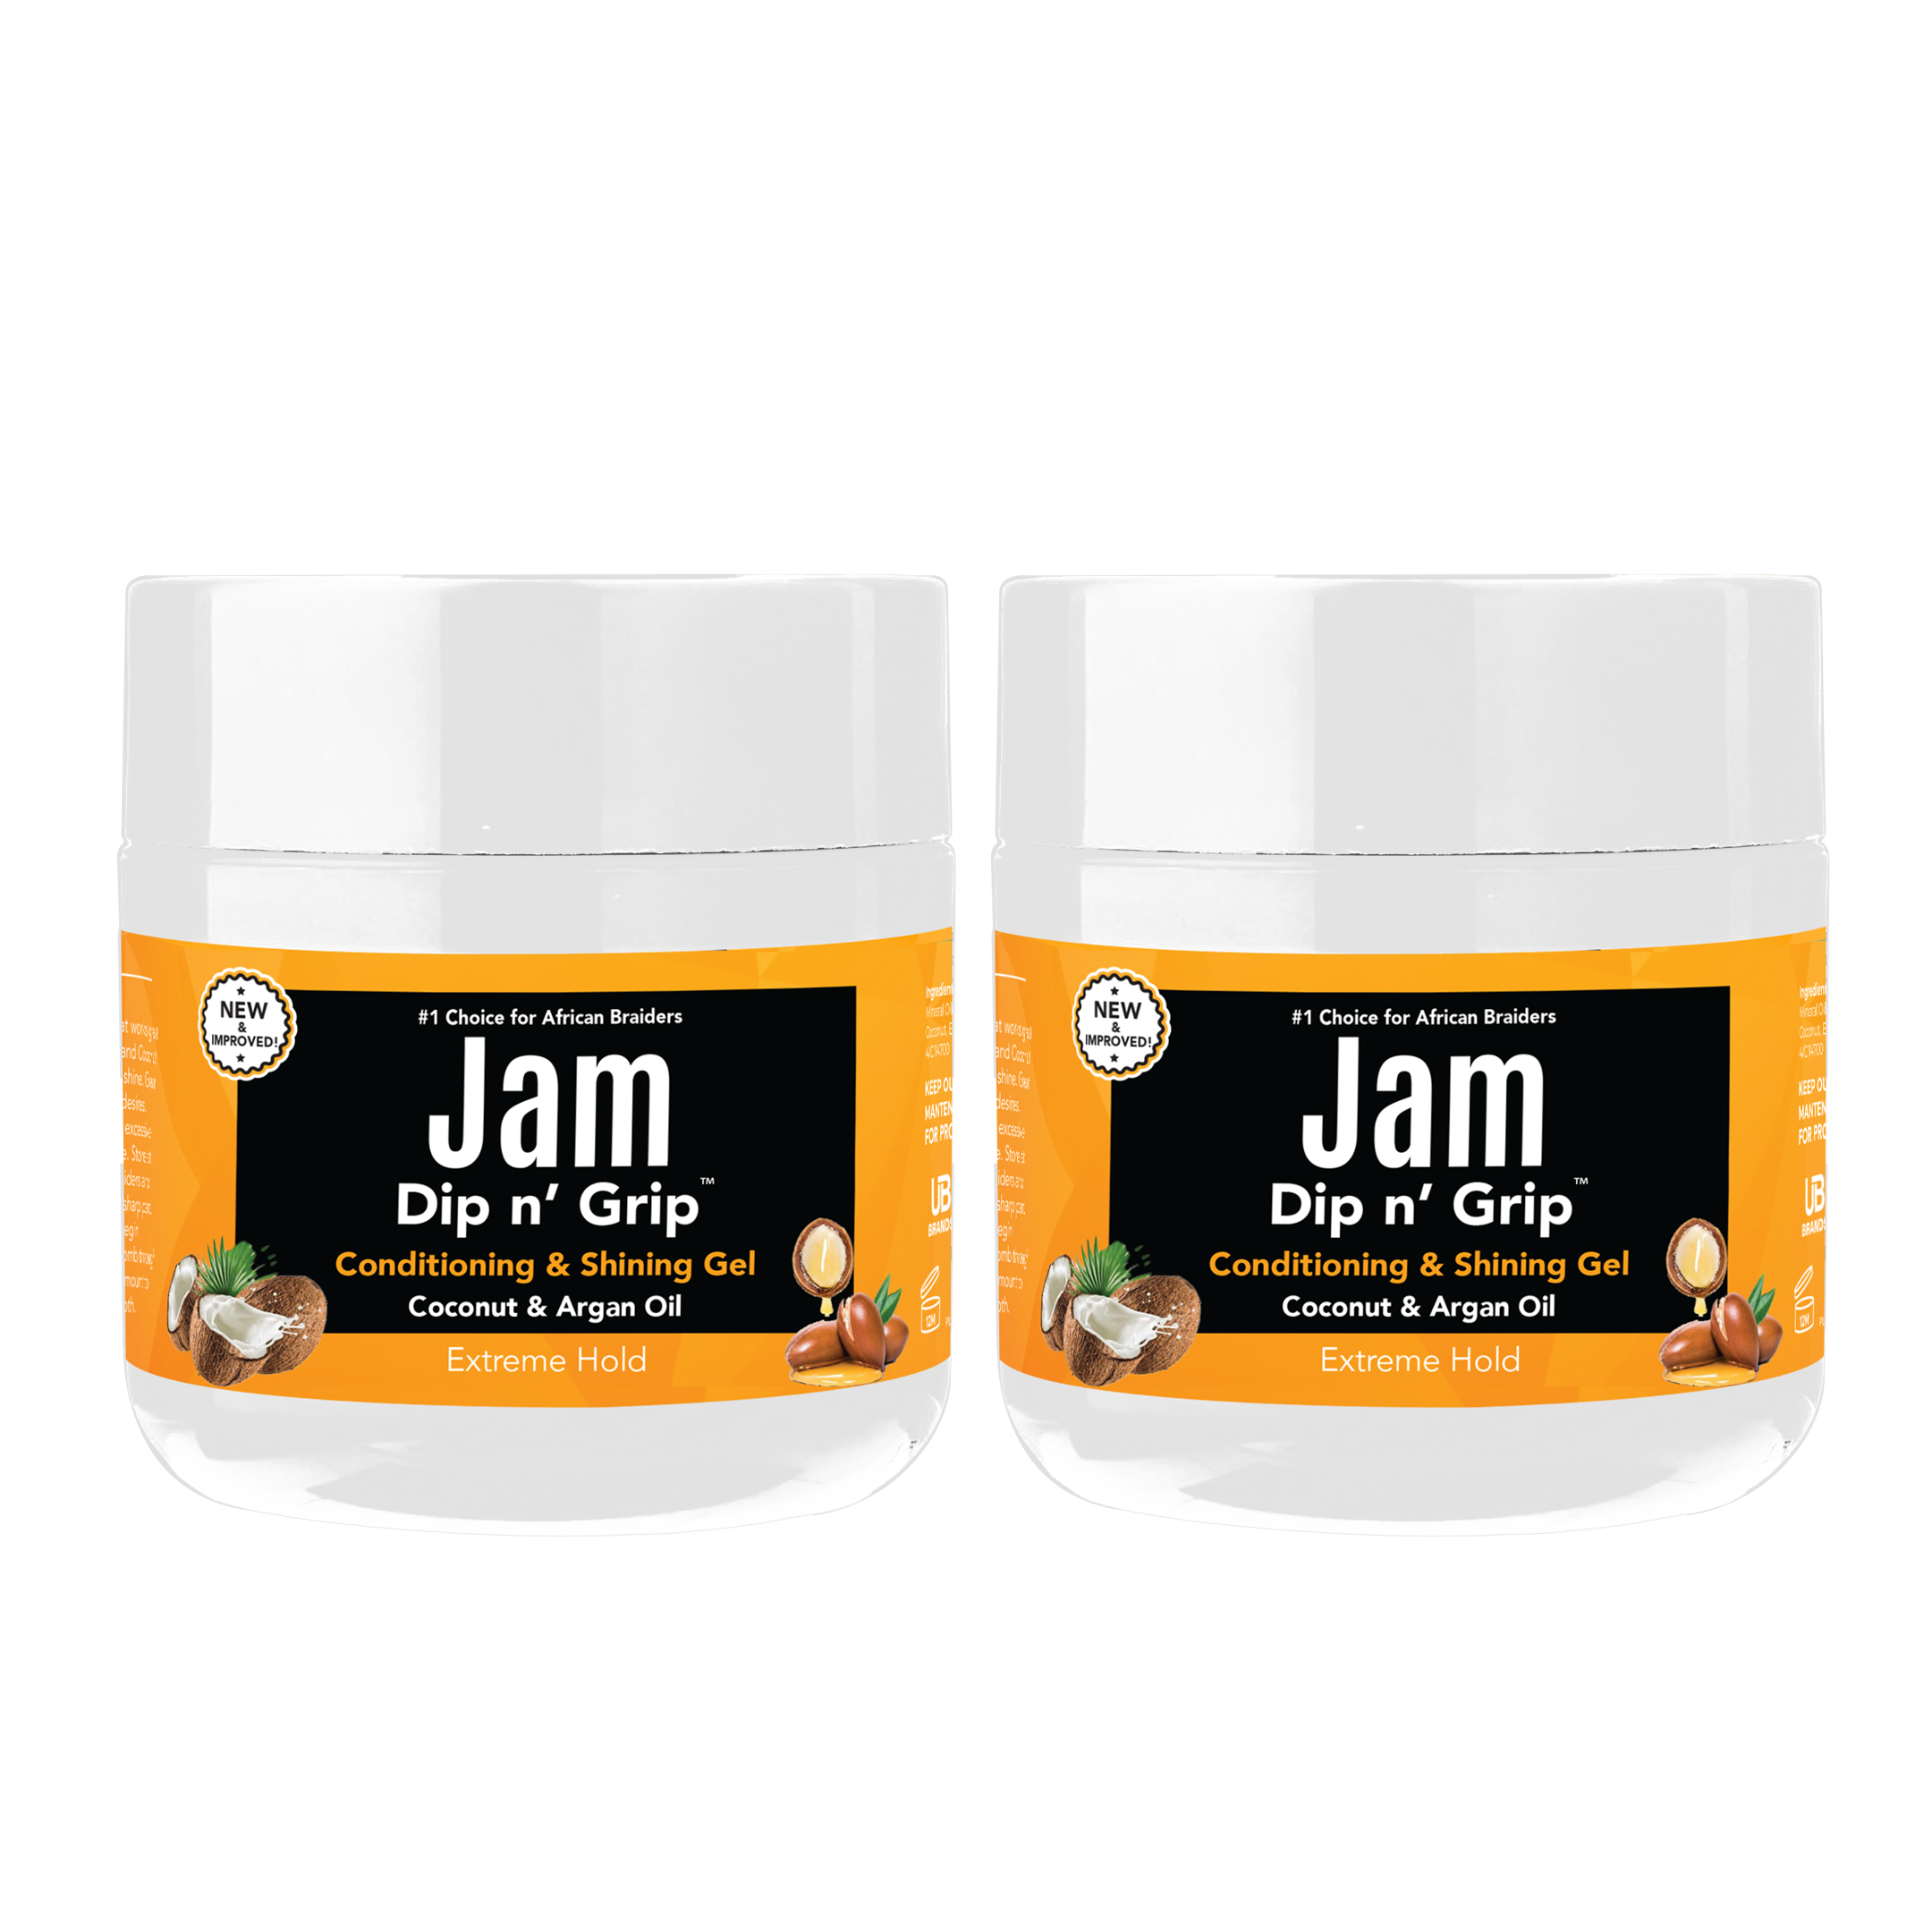 Jam Dip n Grip Coconut and Argan Oil Clarifying Hair Styling Gel 4oz (2 Pack) - Unisex - image 1 of 6